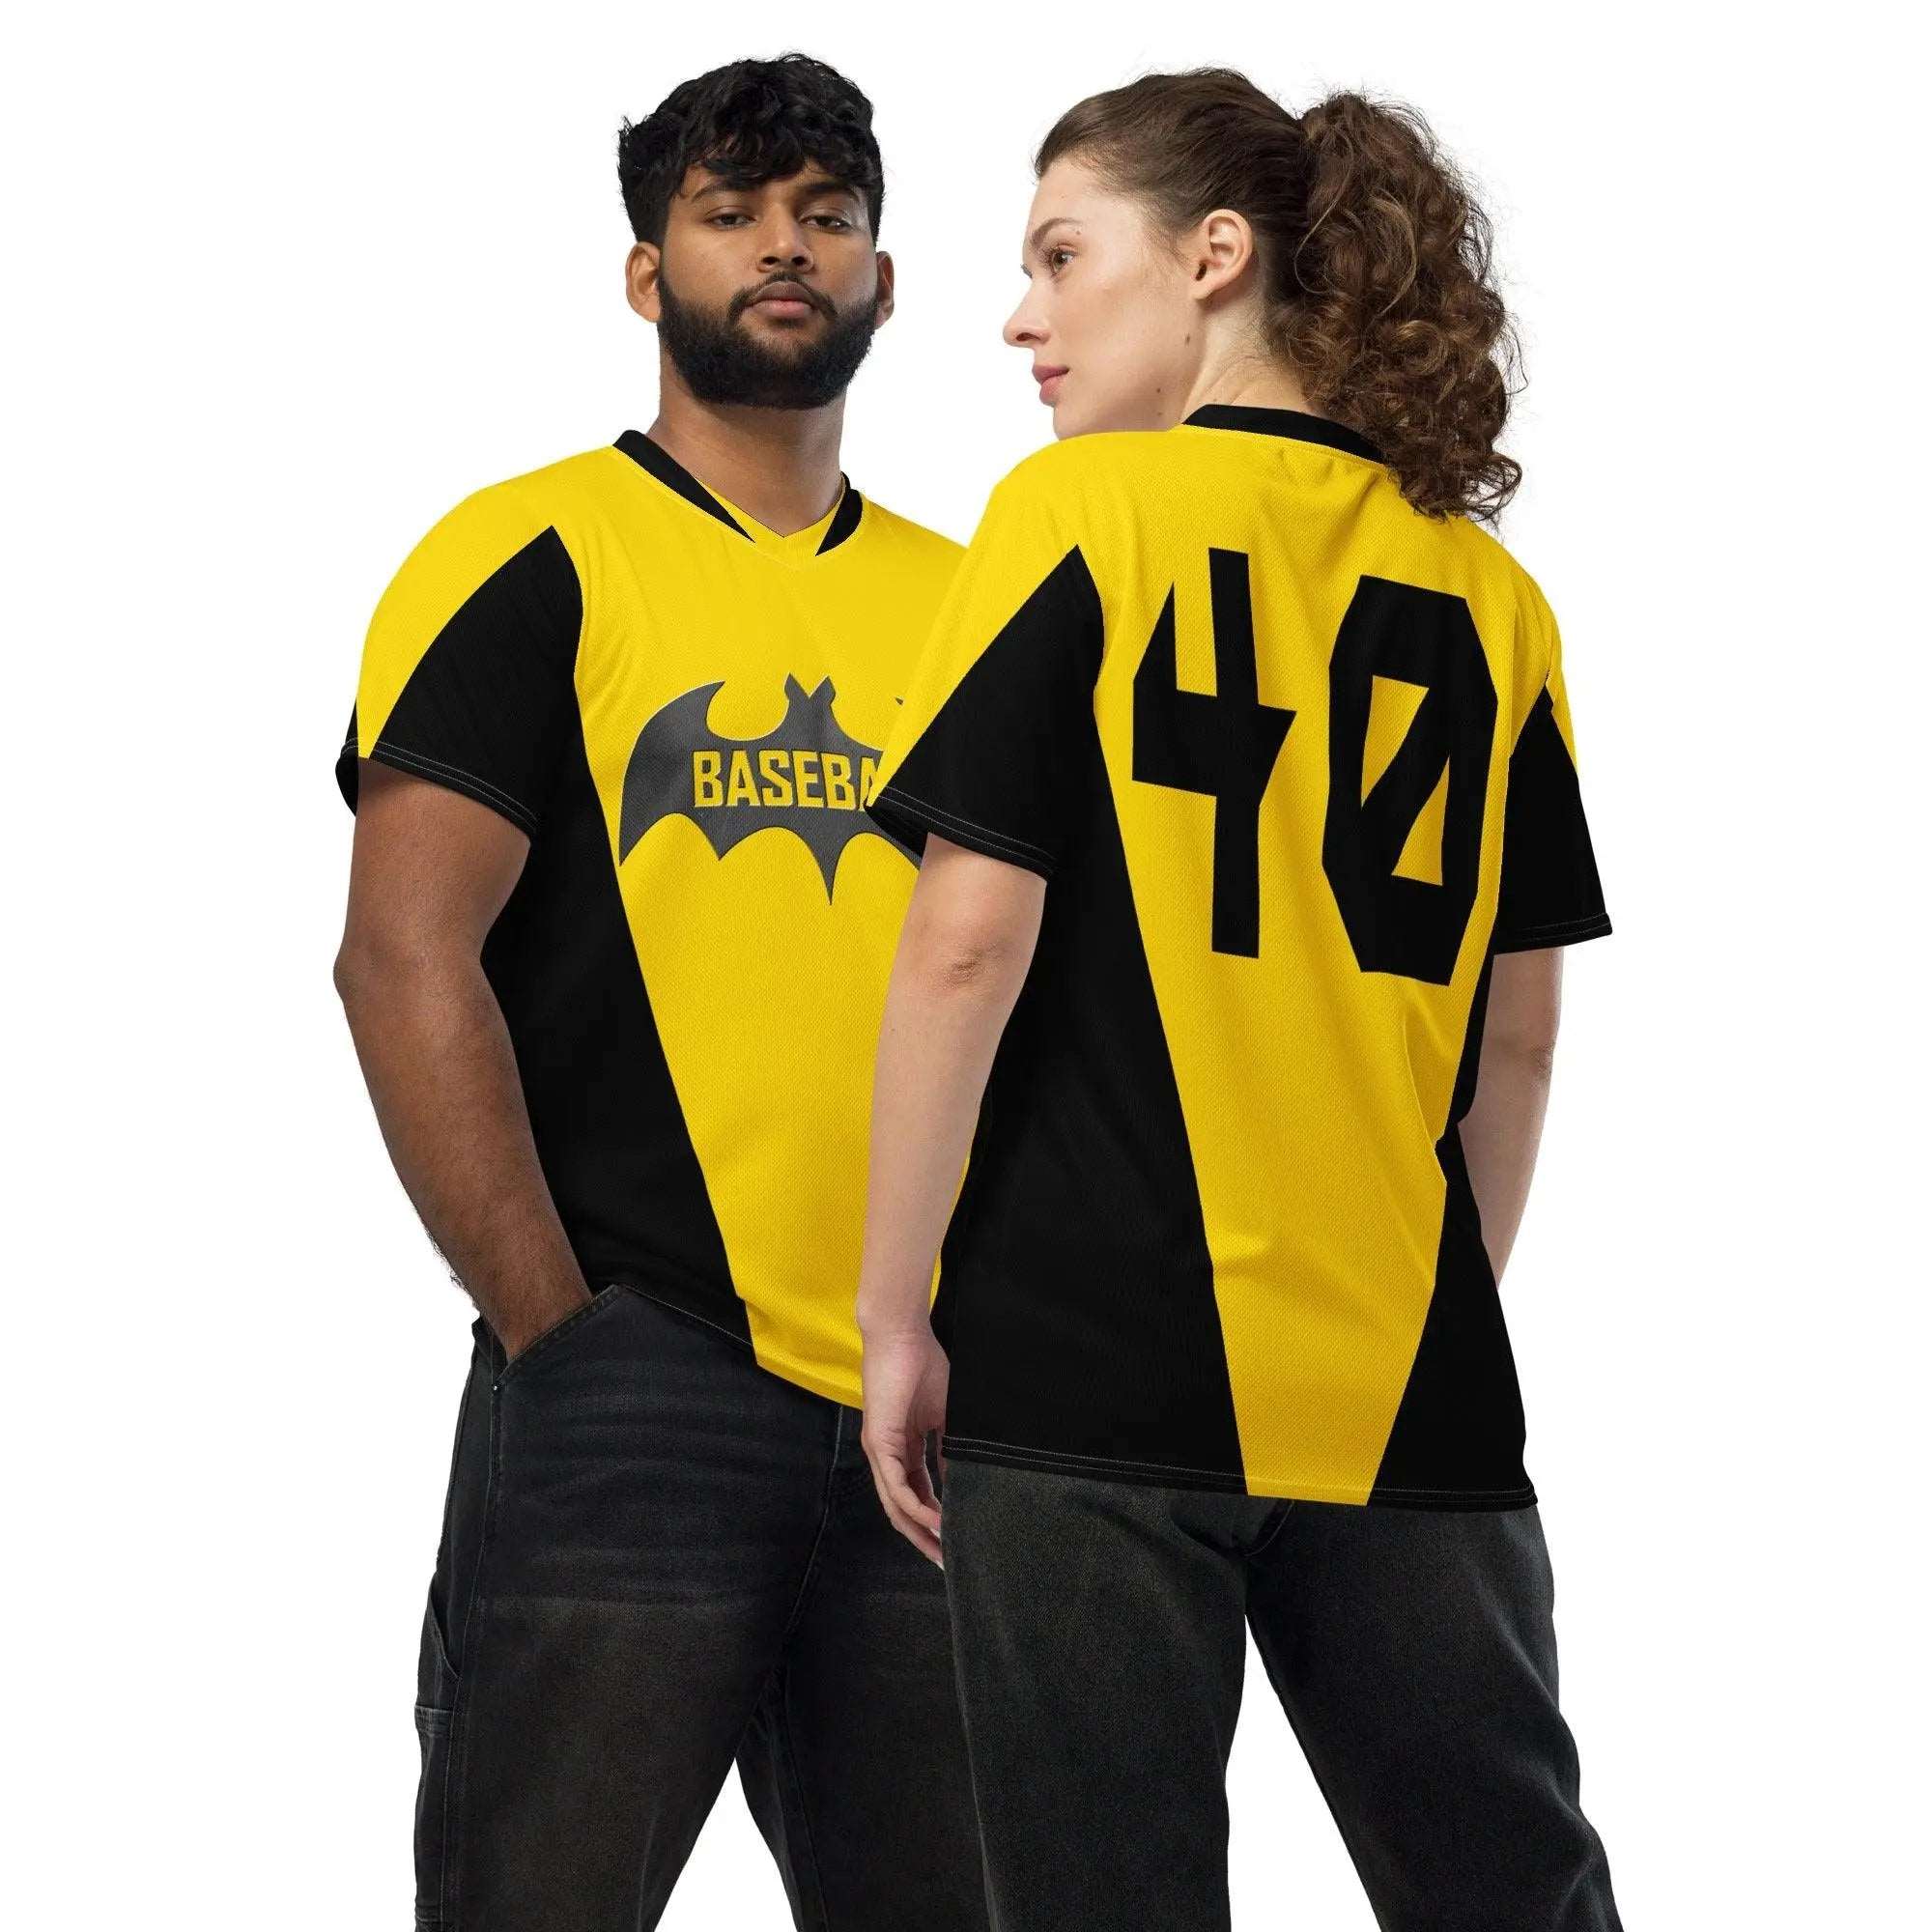 Baseball Bat Recycled unisex sports jersey VAWDesigns